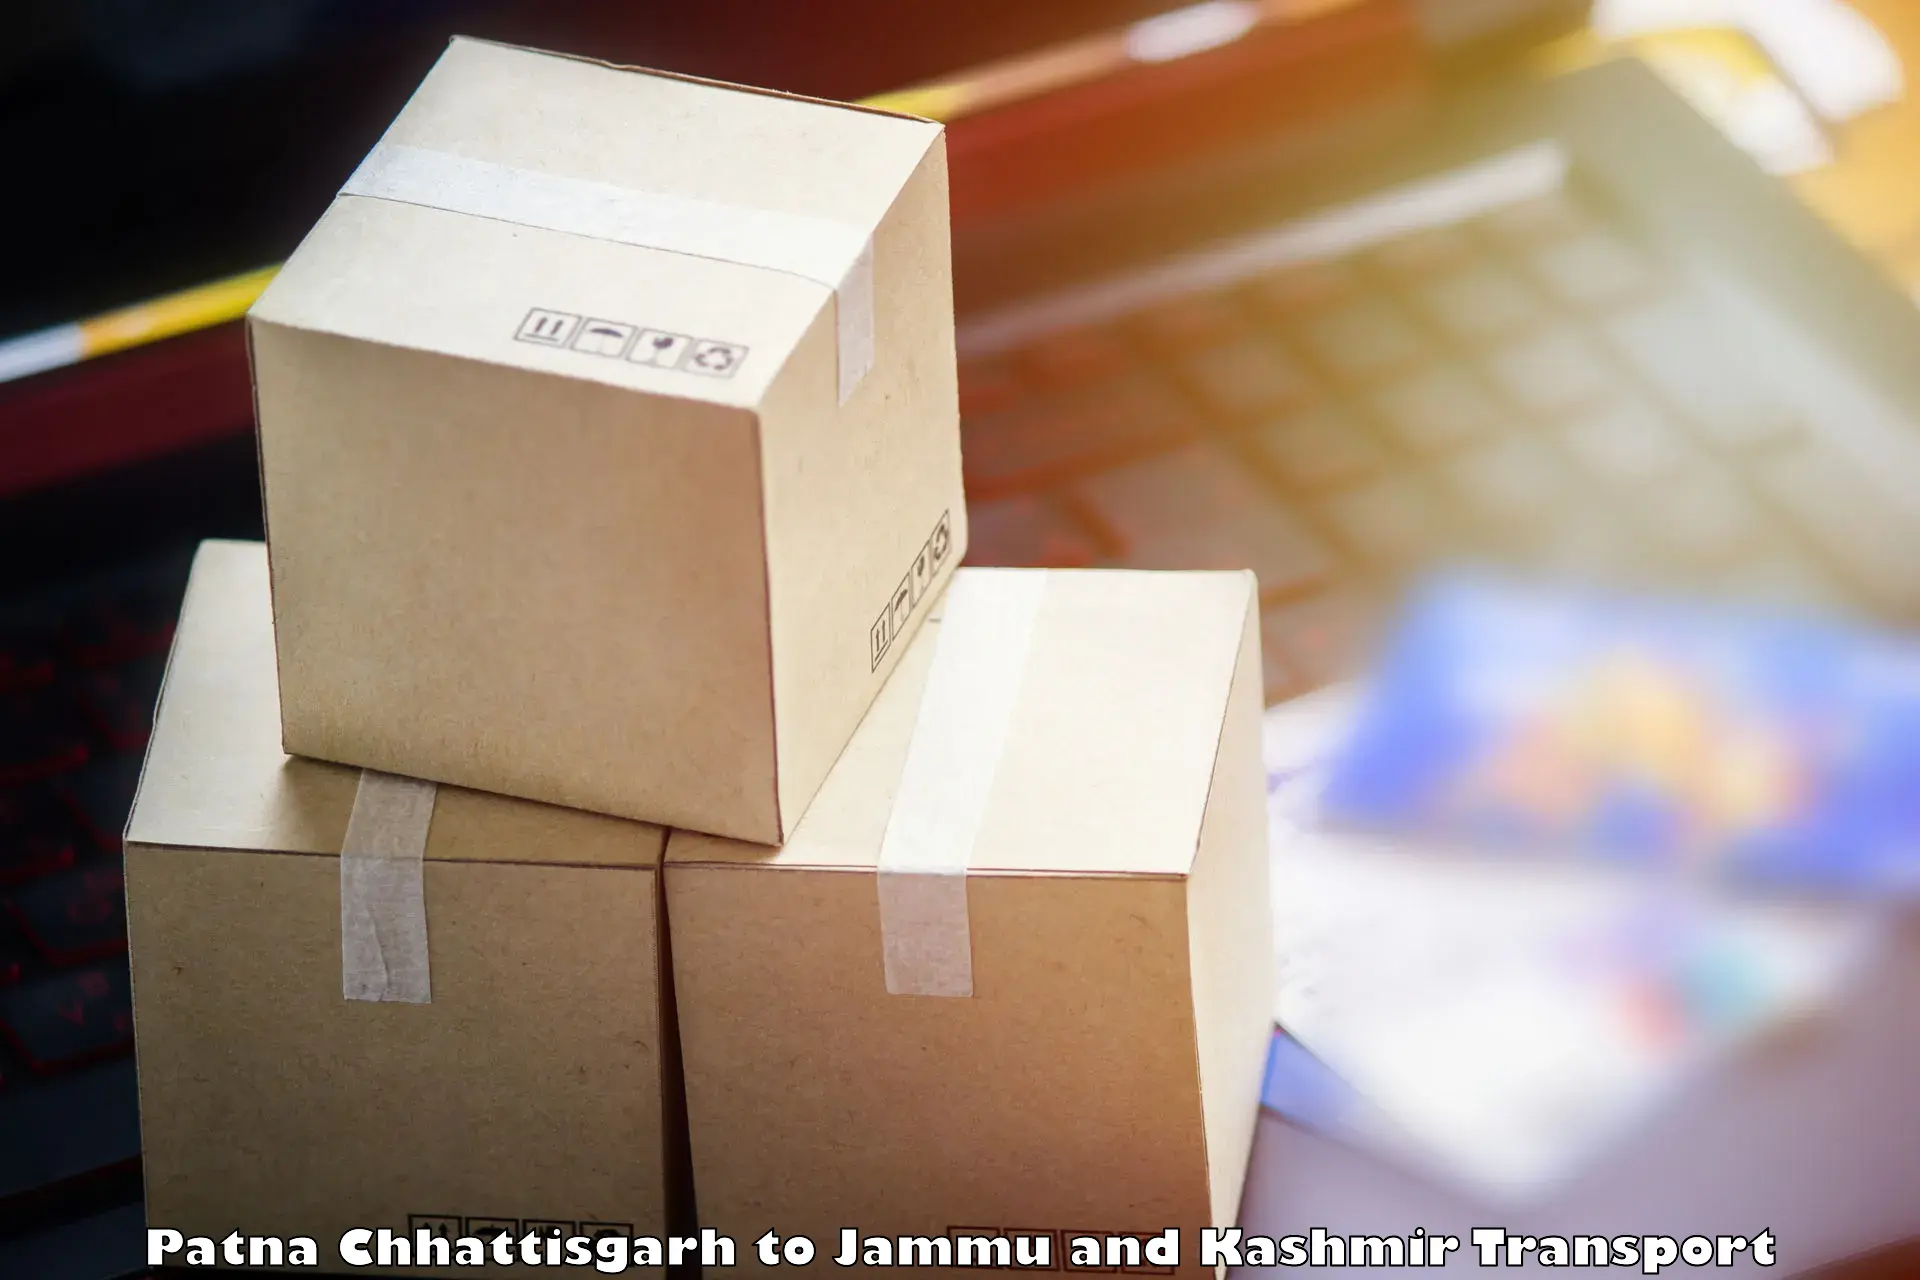 Shipping partner Patna Chhattisgarh to Kargil